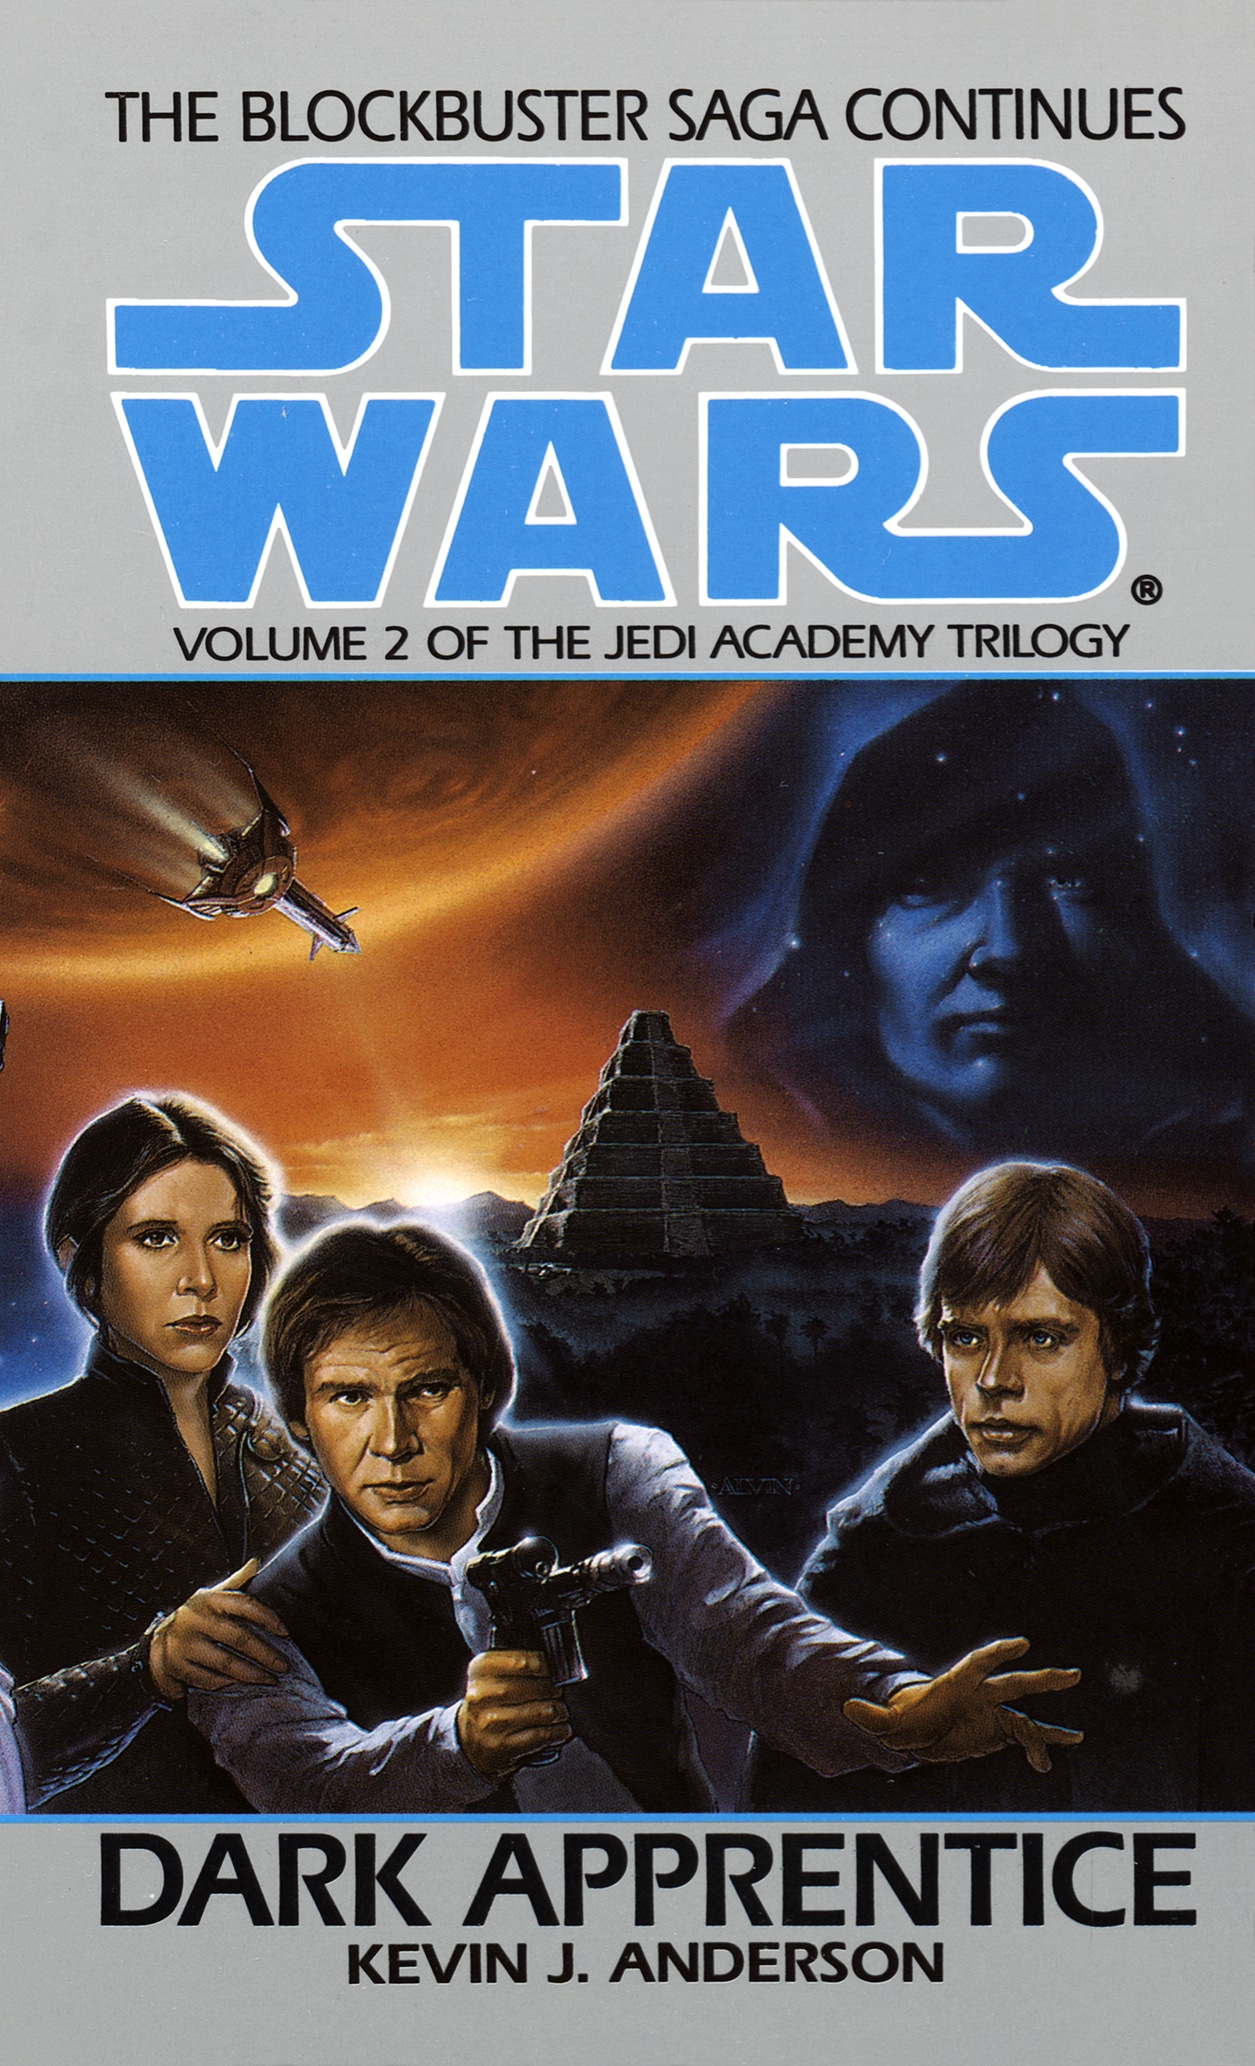 Kevin Anderson: Dark Apprentice (Star Wars: The Jedi Academy Trilogy, Vol. 2) (1994, Random House Audio)